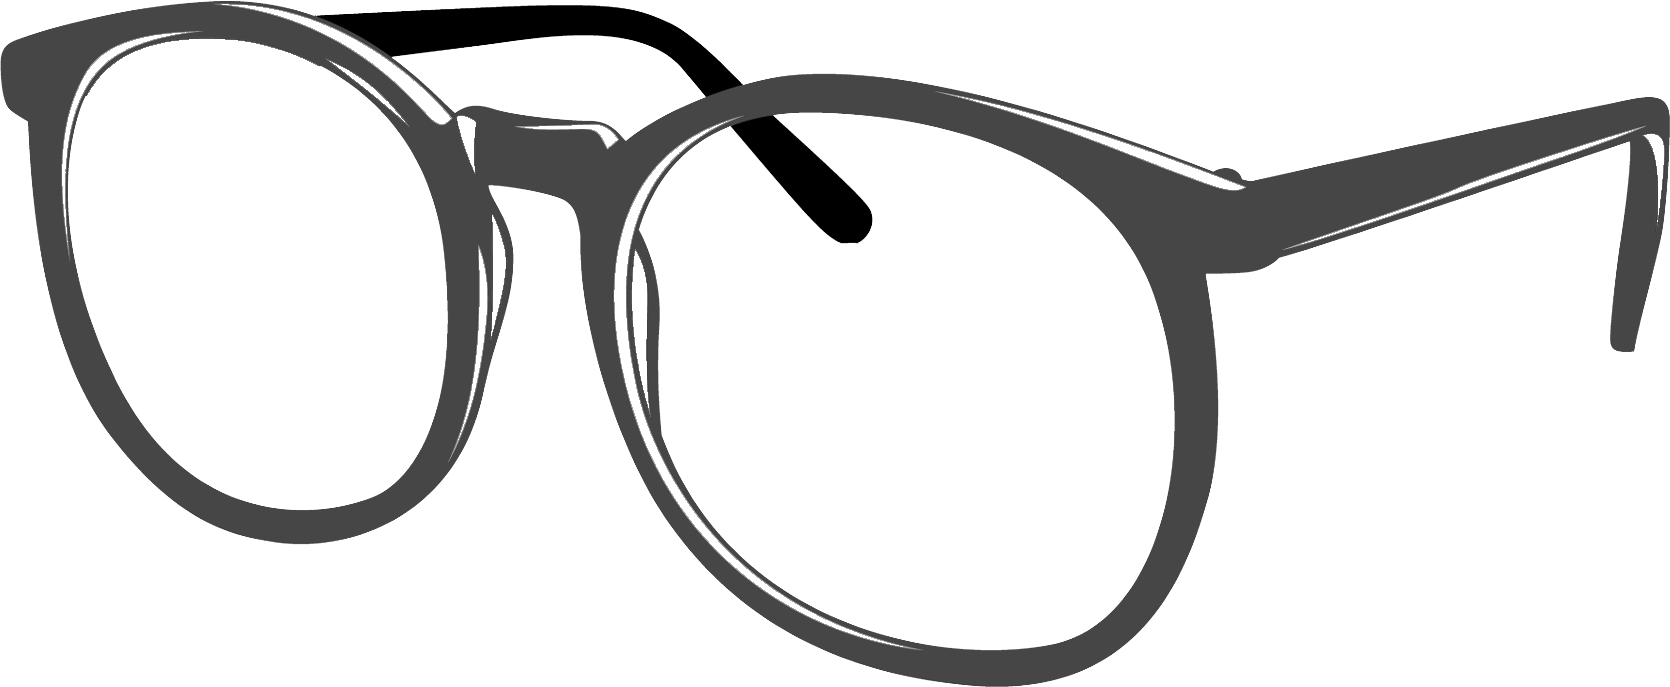 Glasses PNG images, free glasses png images free download